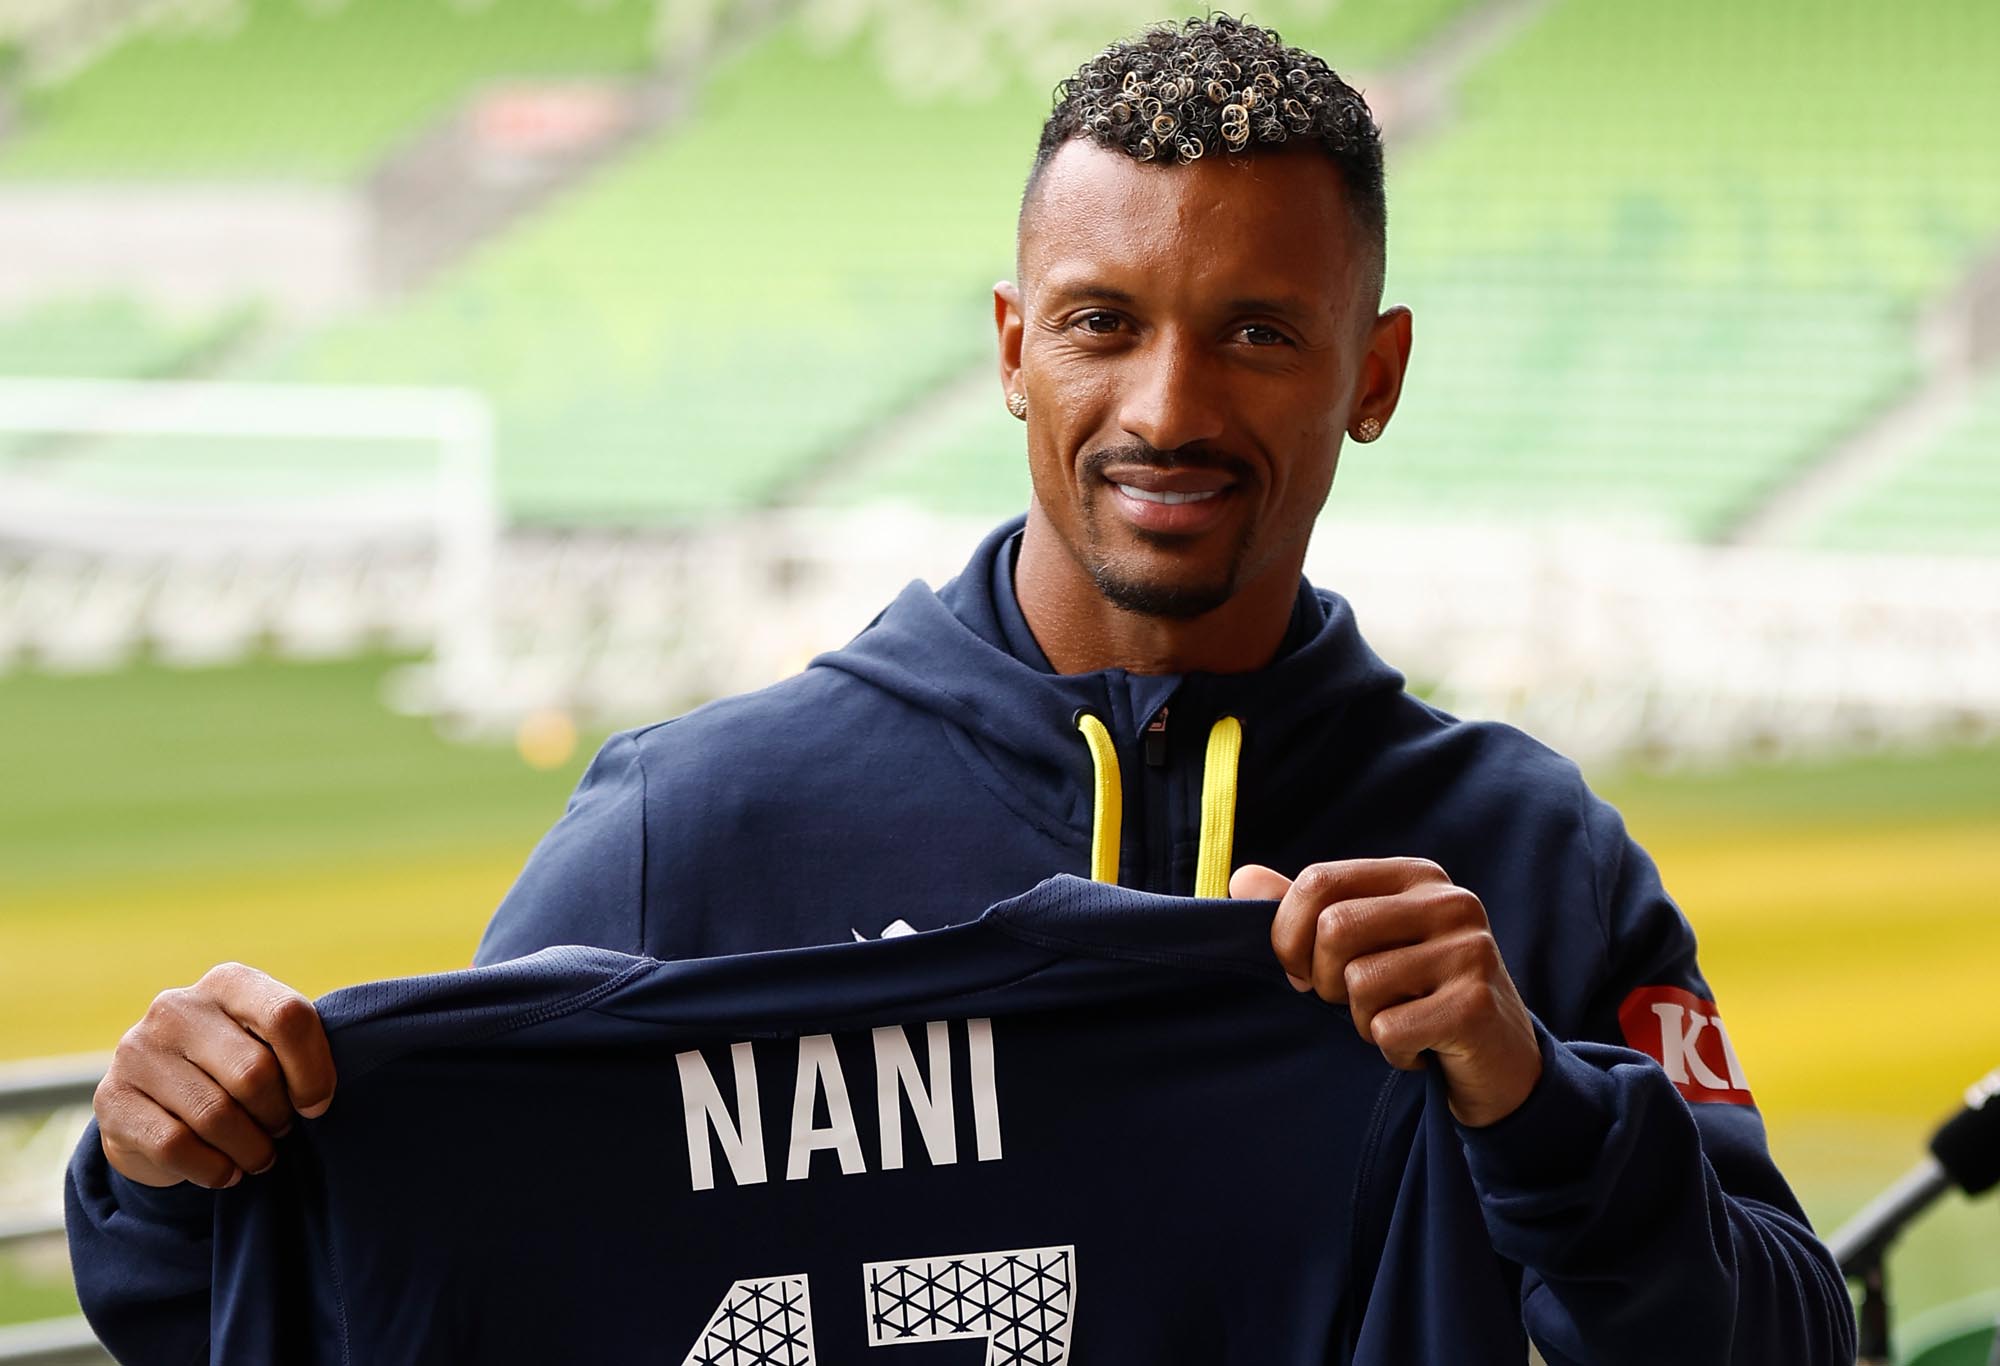 Portuguese football player Nani